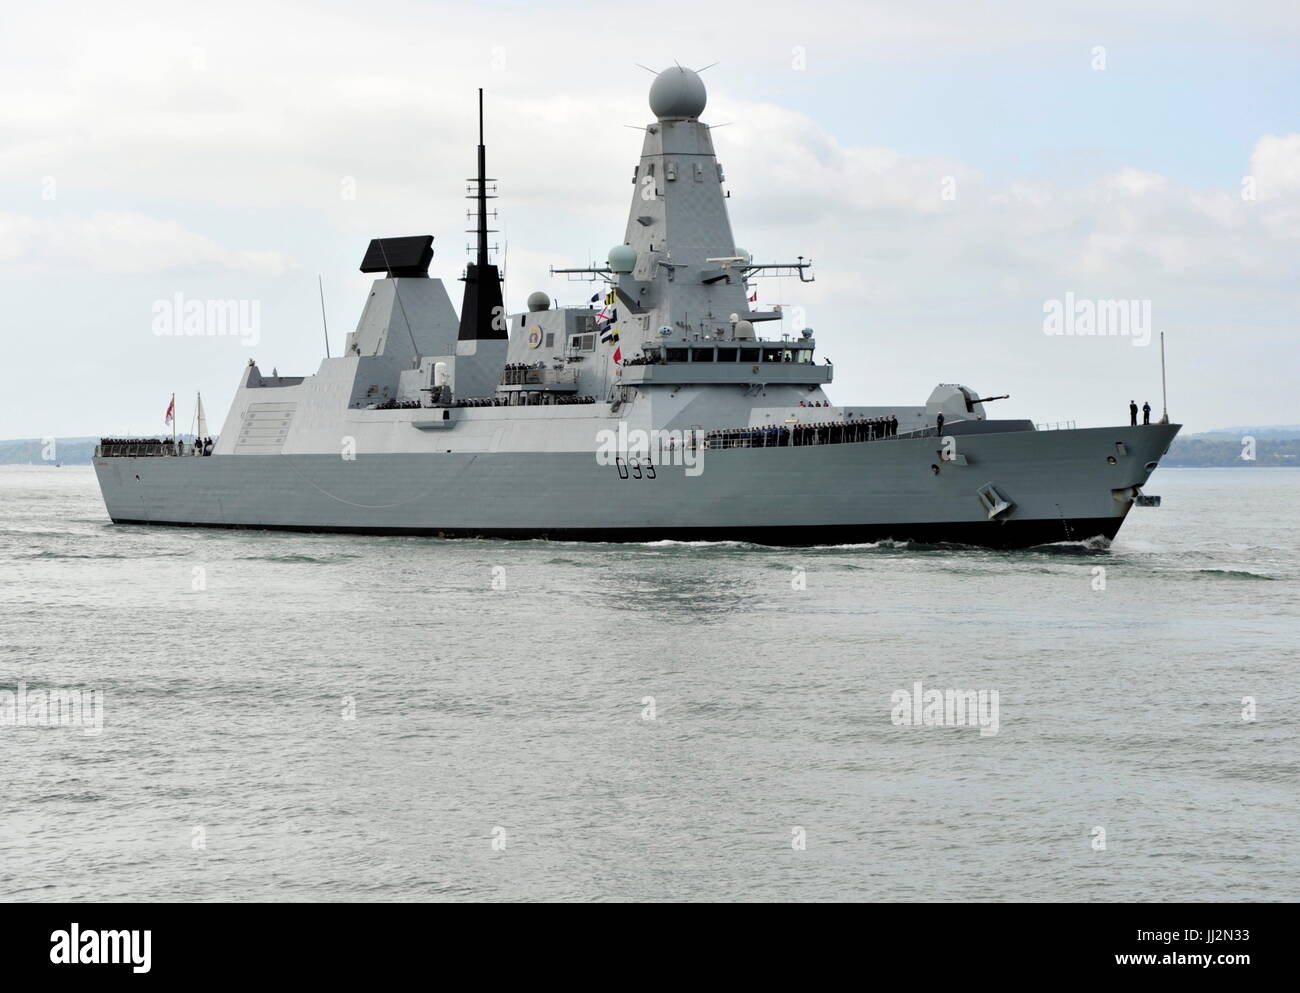 AJAXNETPHOTO.15TH MAI 2015. -PORTSMOUTH, ENGLAND. -ART 45 ZERSTÖRER HMS DAUNTLESS EINGABE HAFEN. FOTO: TONY HOLLAND/AJAX REF: DTH151505 38026 Stockfoto